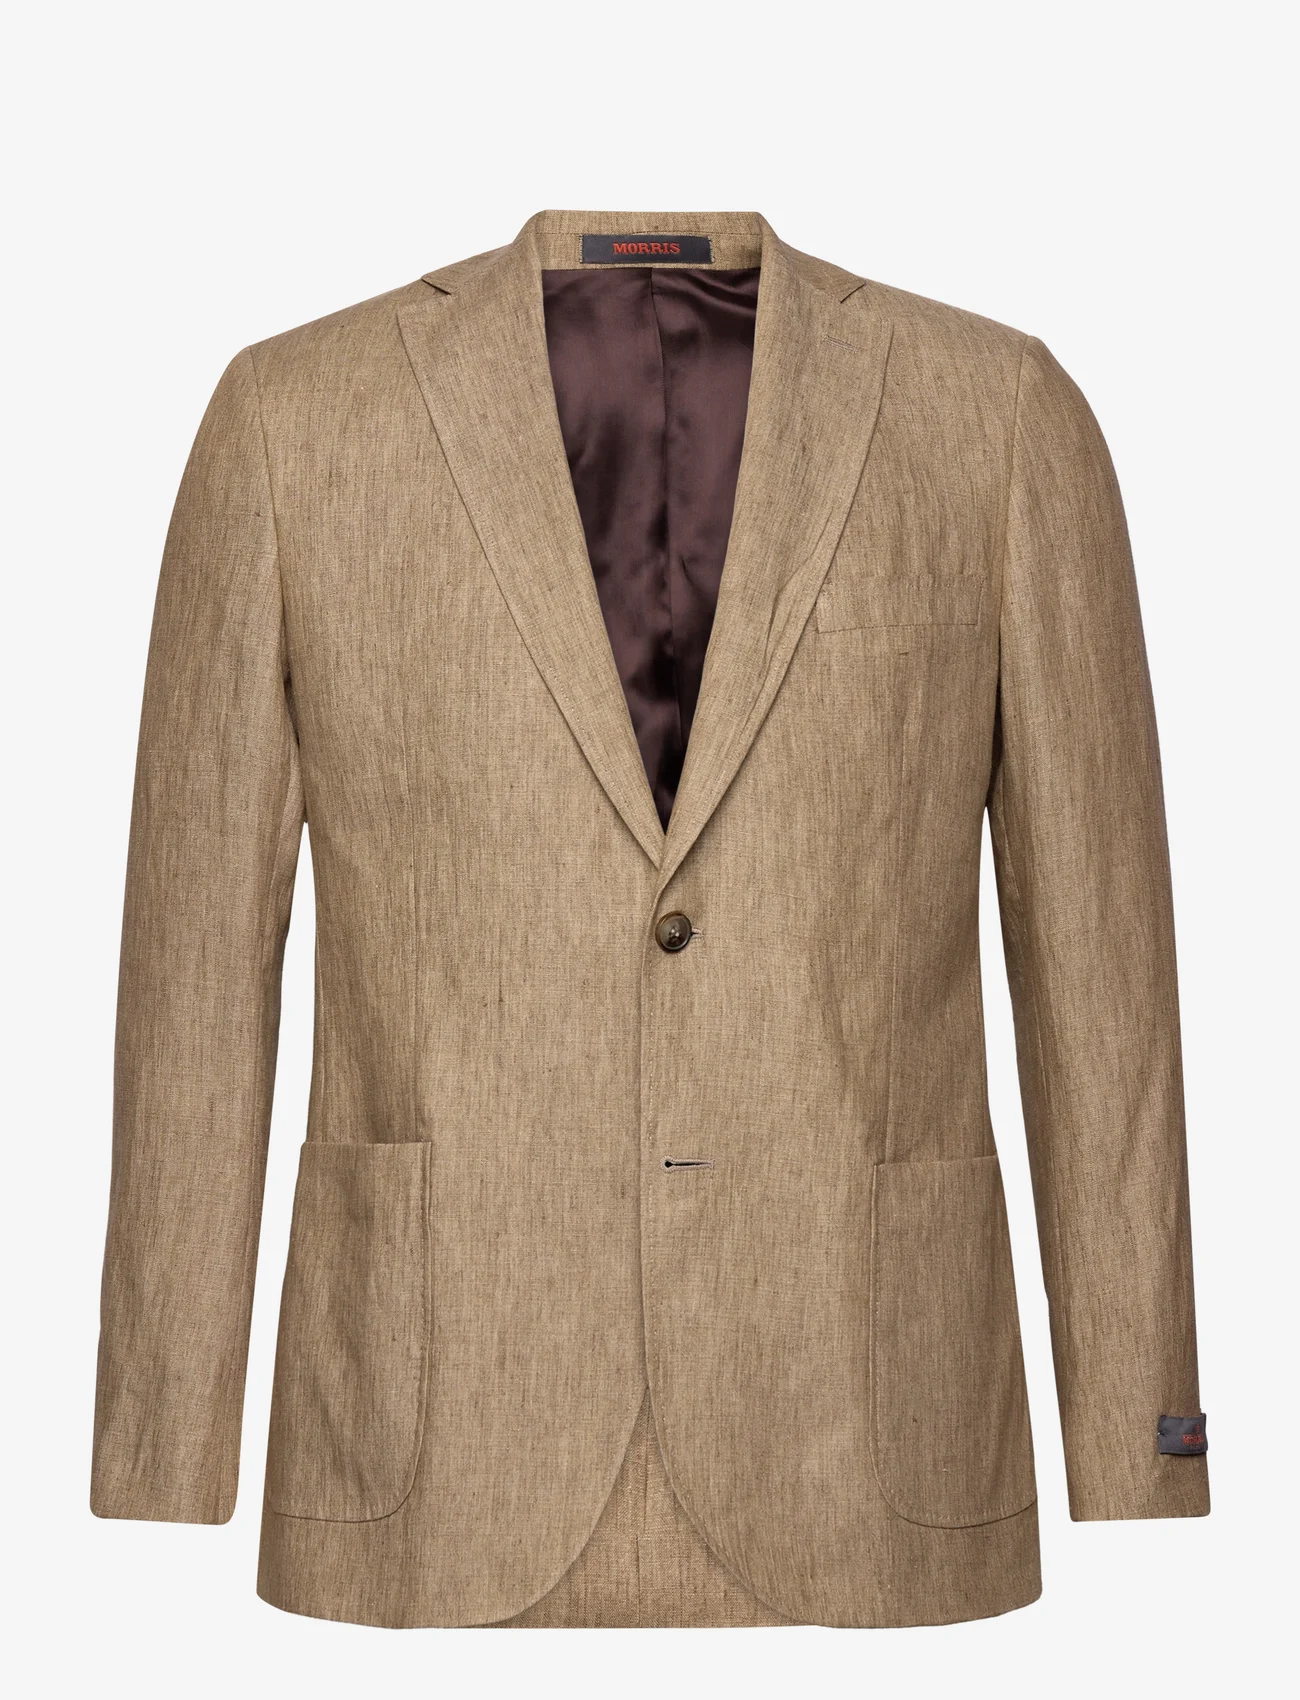 Morris - Archie Linen Suit Jkt - zweireiher - khaki - 0